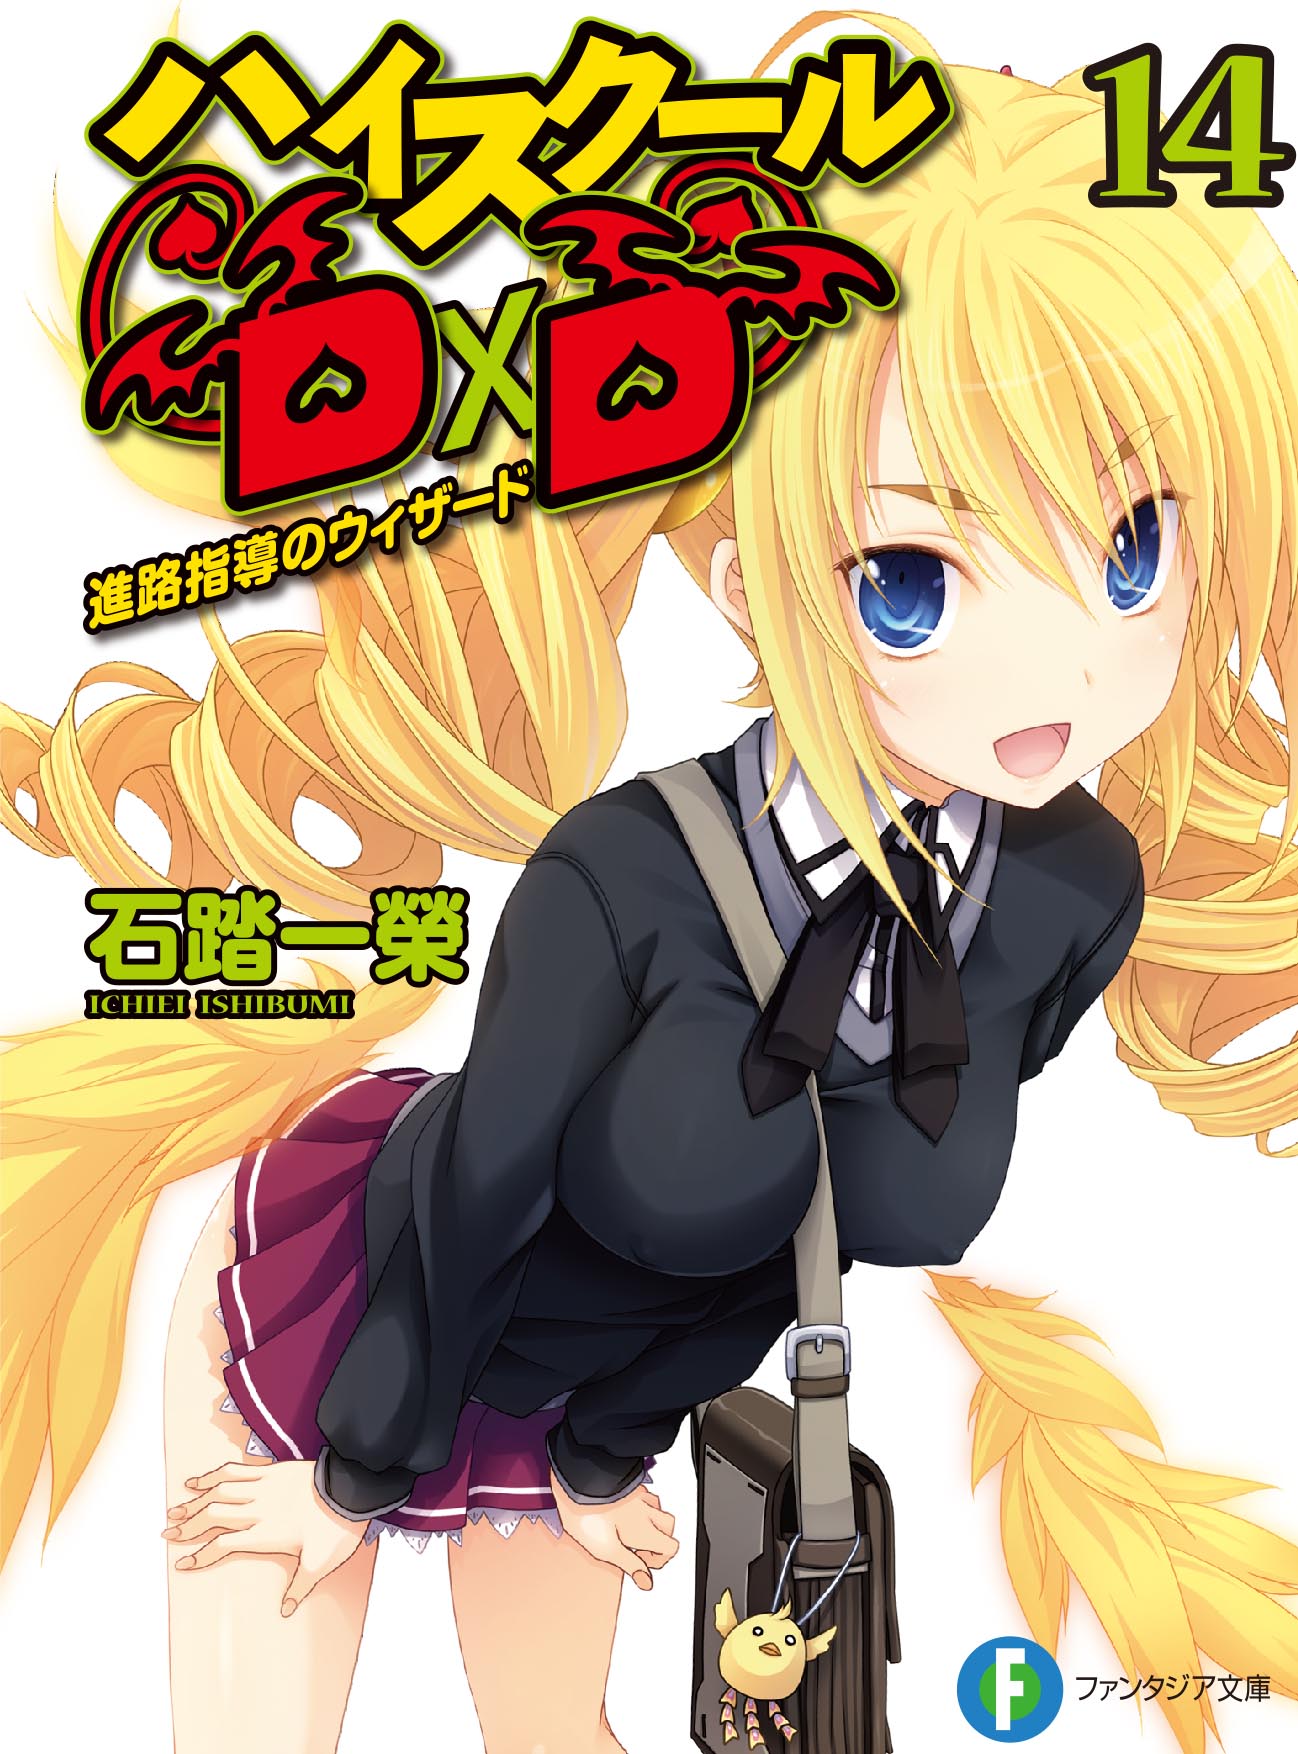 High School DxD, Vol. 2 (light novel): The Phoenix of the School  Battle|Paperback